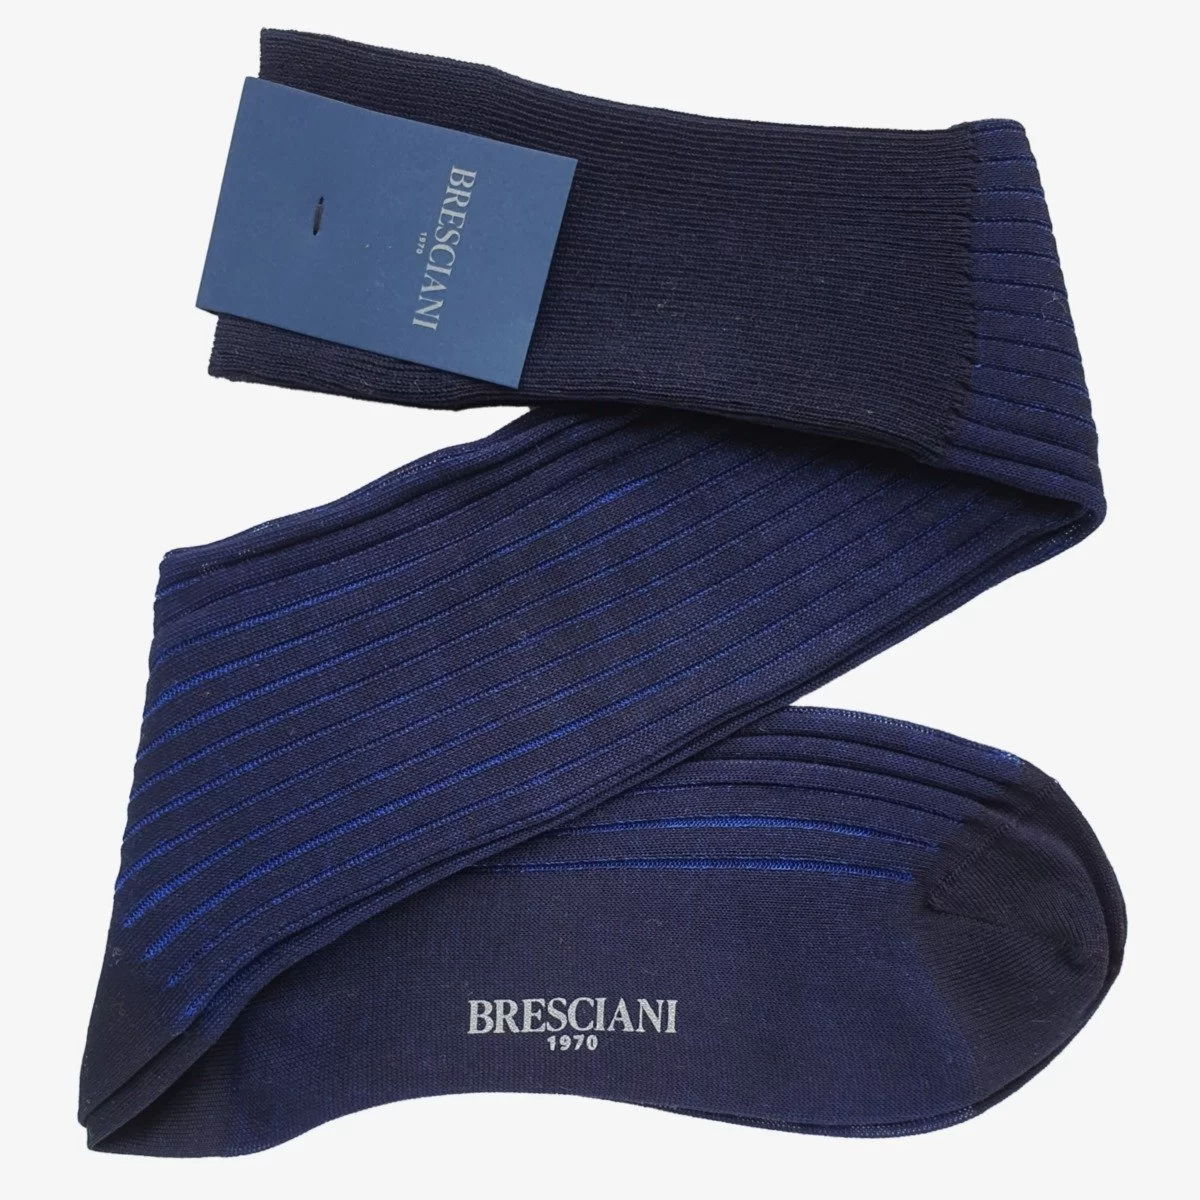 Bresciani Mario navy and blue ribbed striped cotton knee-high socks